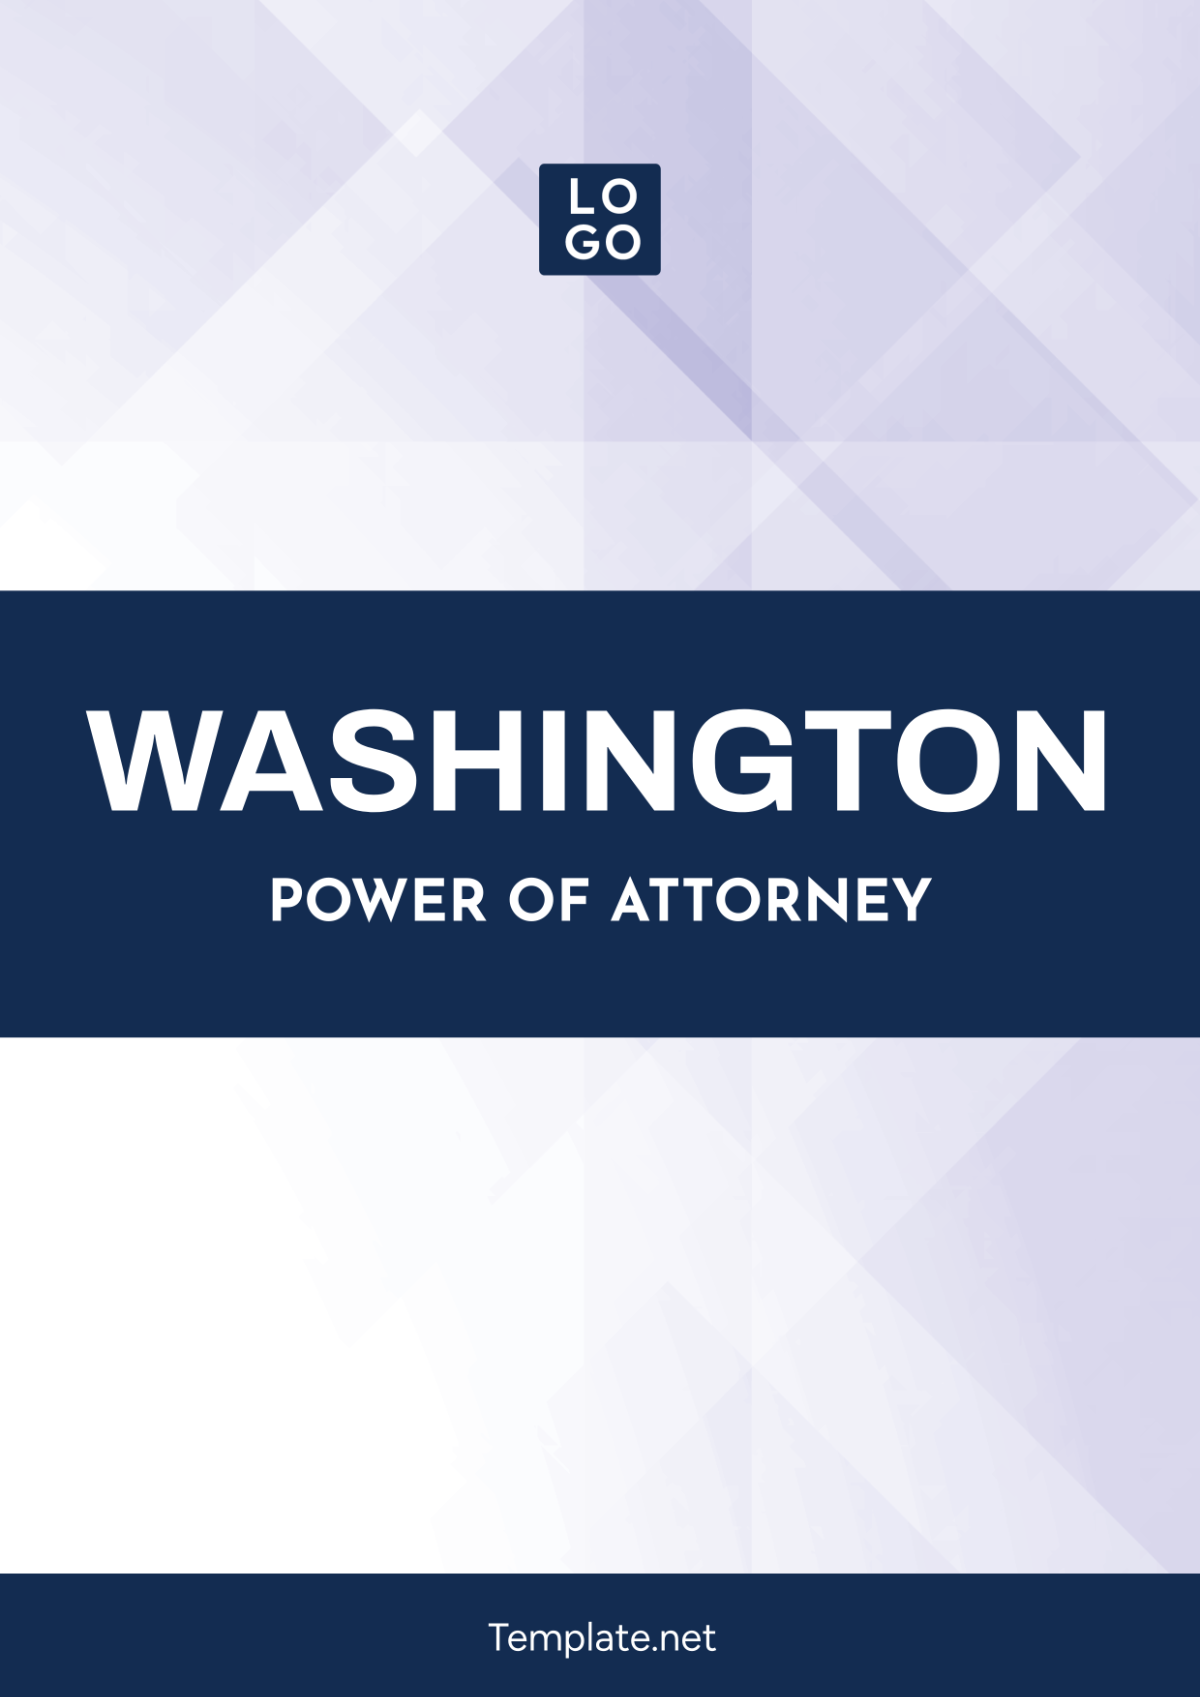 Washington Power of Attorney Template